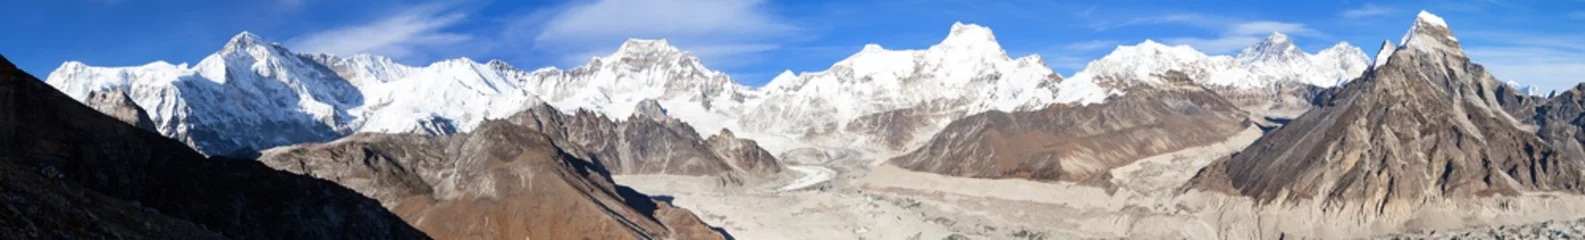 Papier Peint photo Cho Oyu mount Everest and Lhotse, Nepal Himalayas mountains